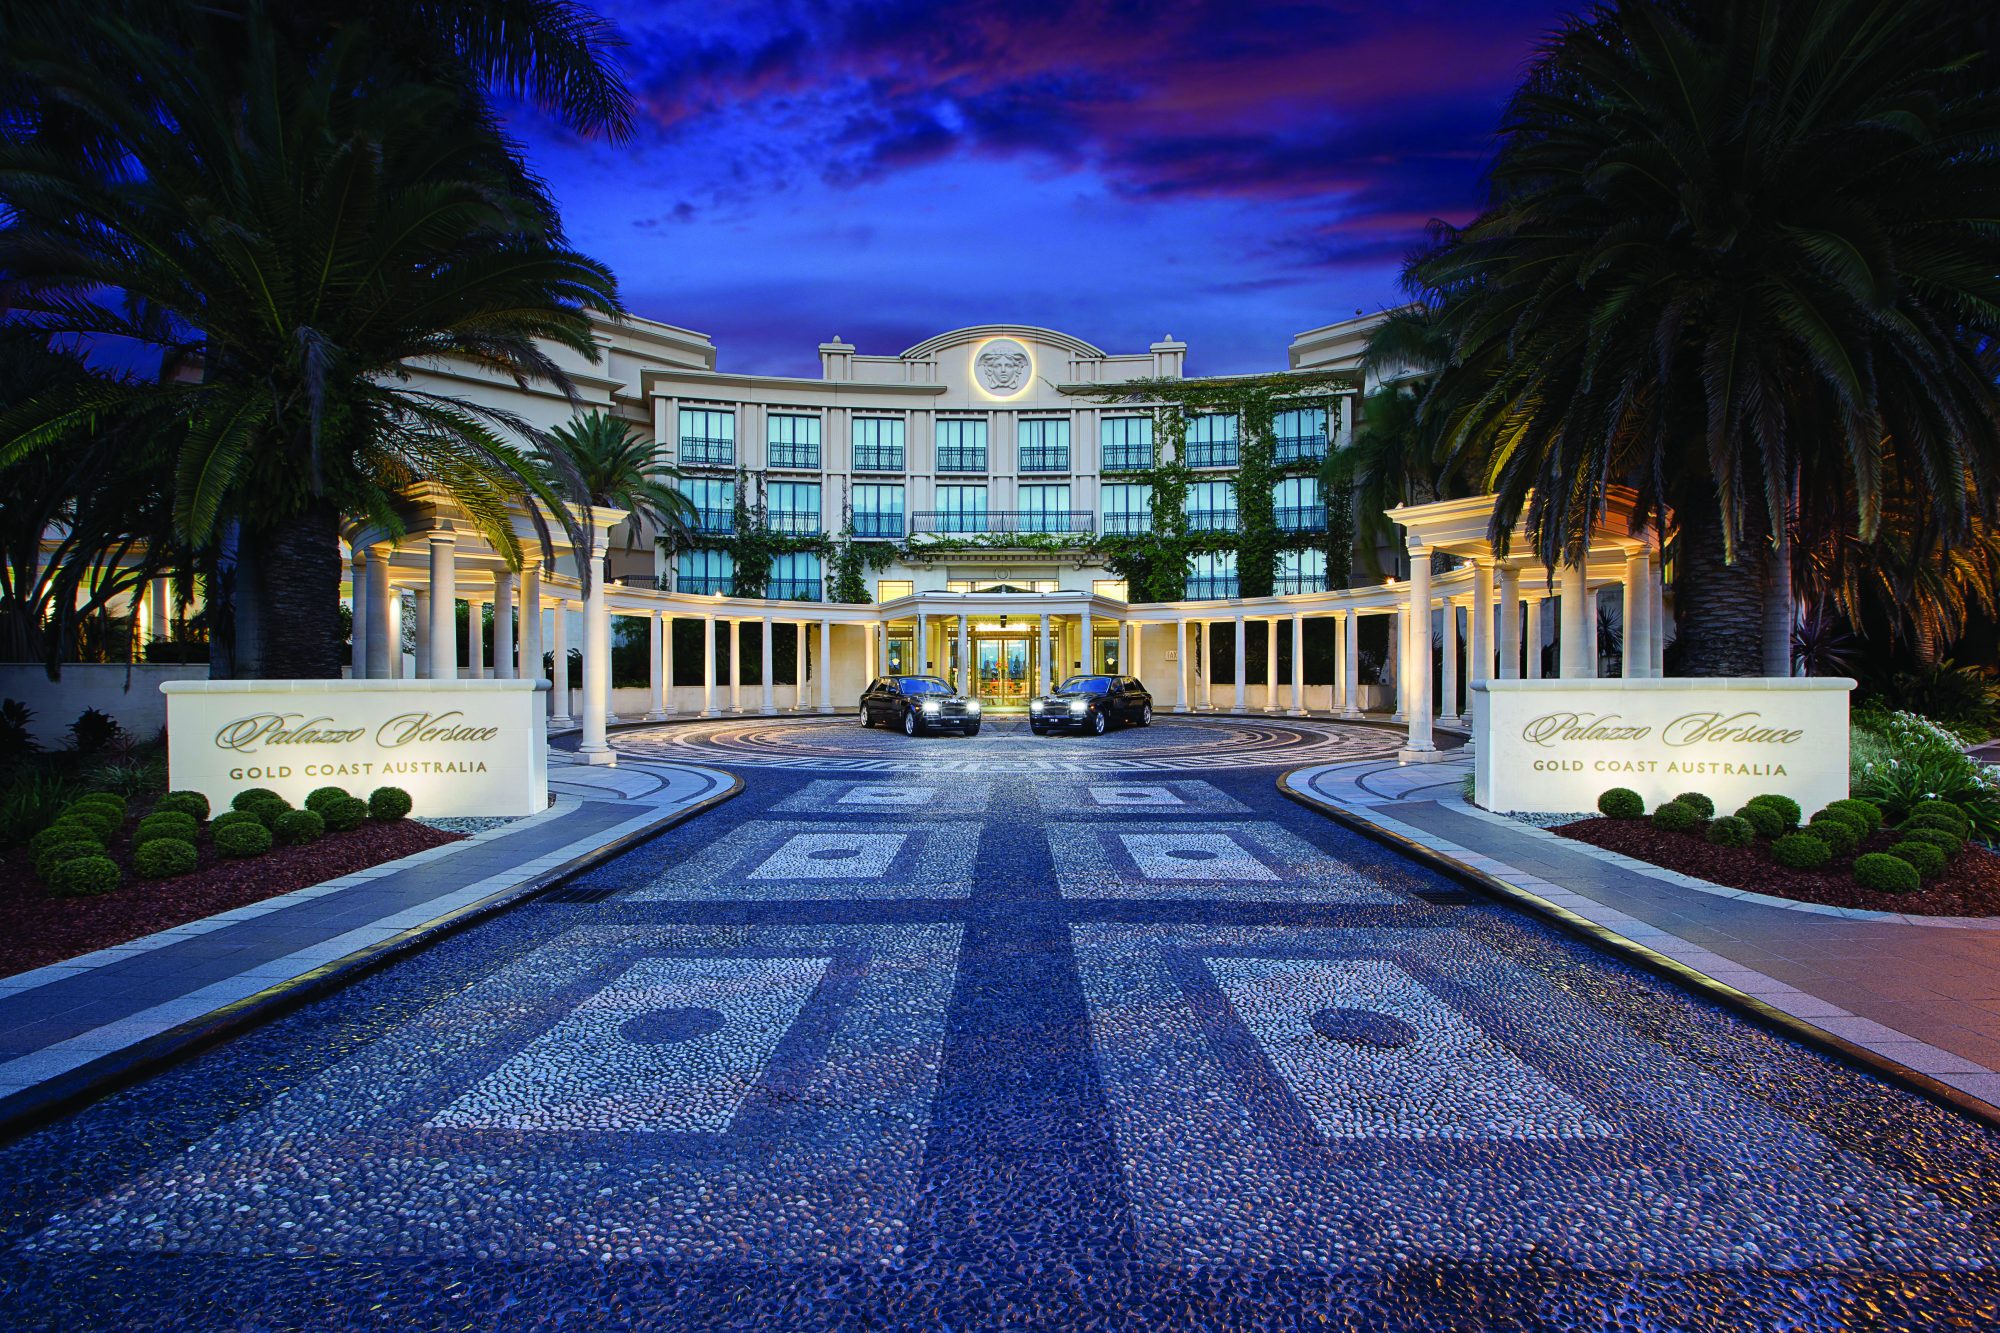 Palazzo Versace one of Australia's best five star hotels